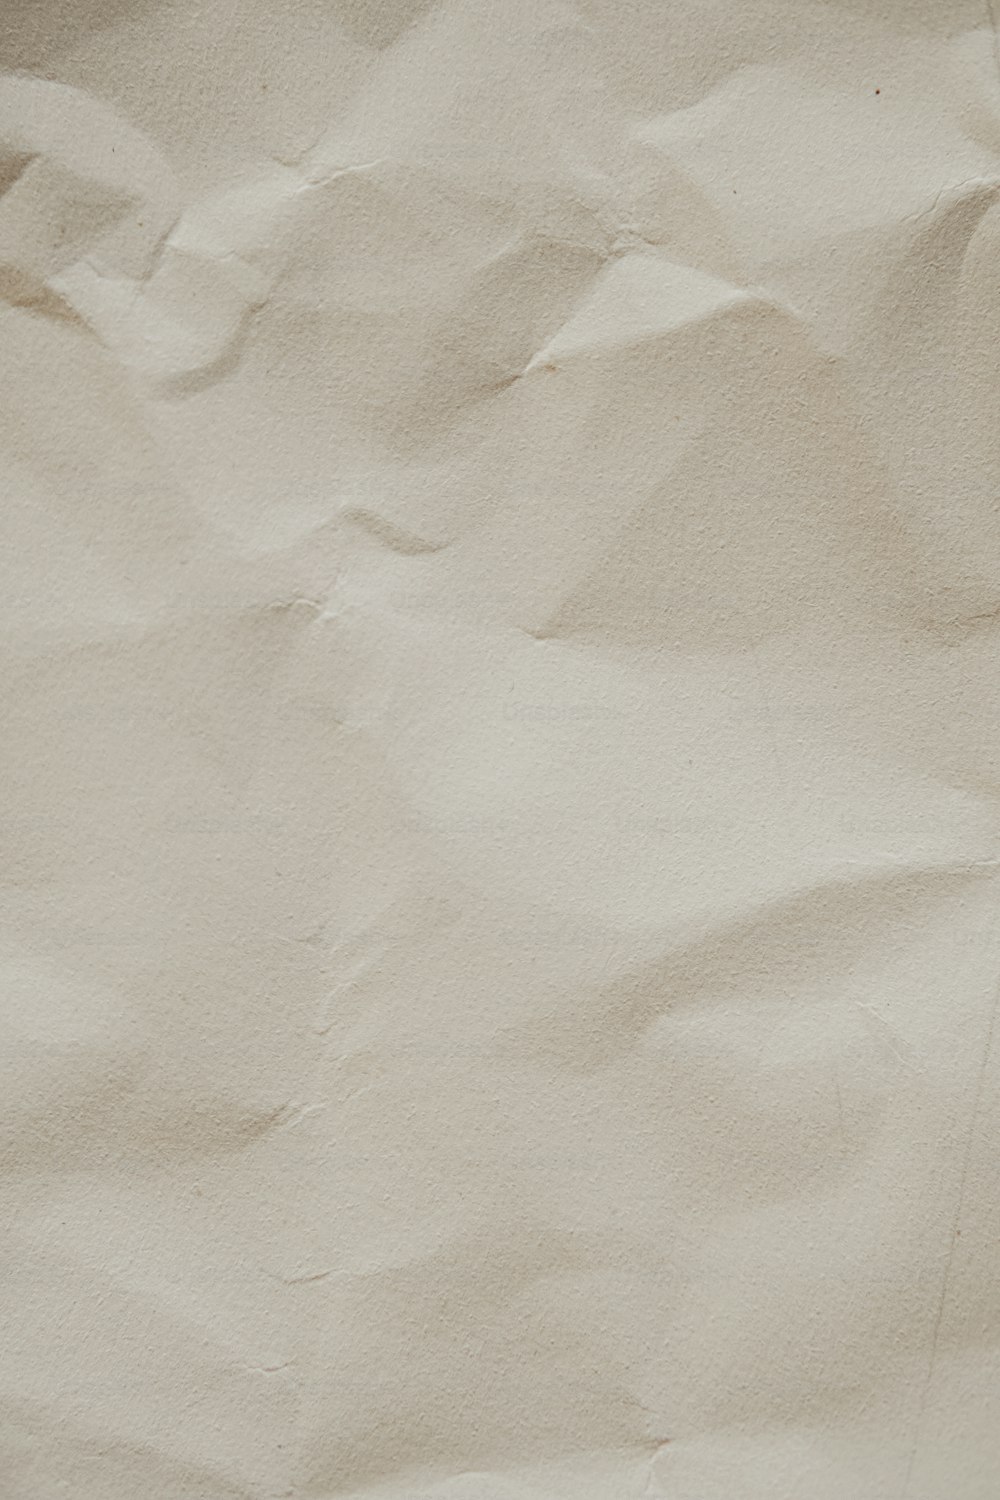 Premium Photo  Crumpled white kraft paper with details texture